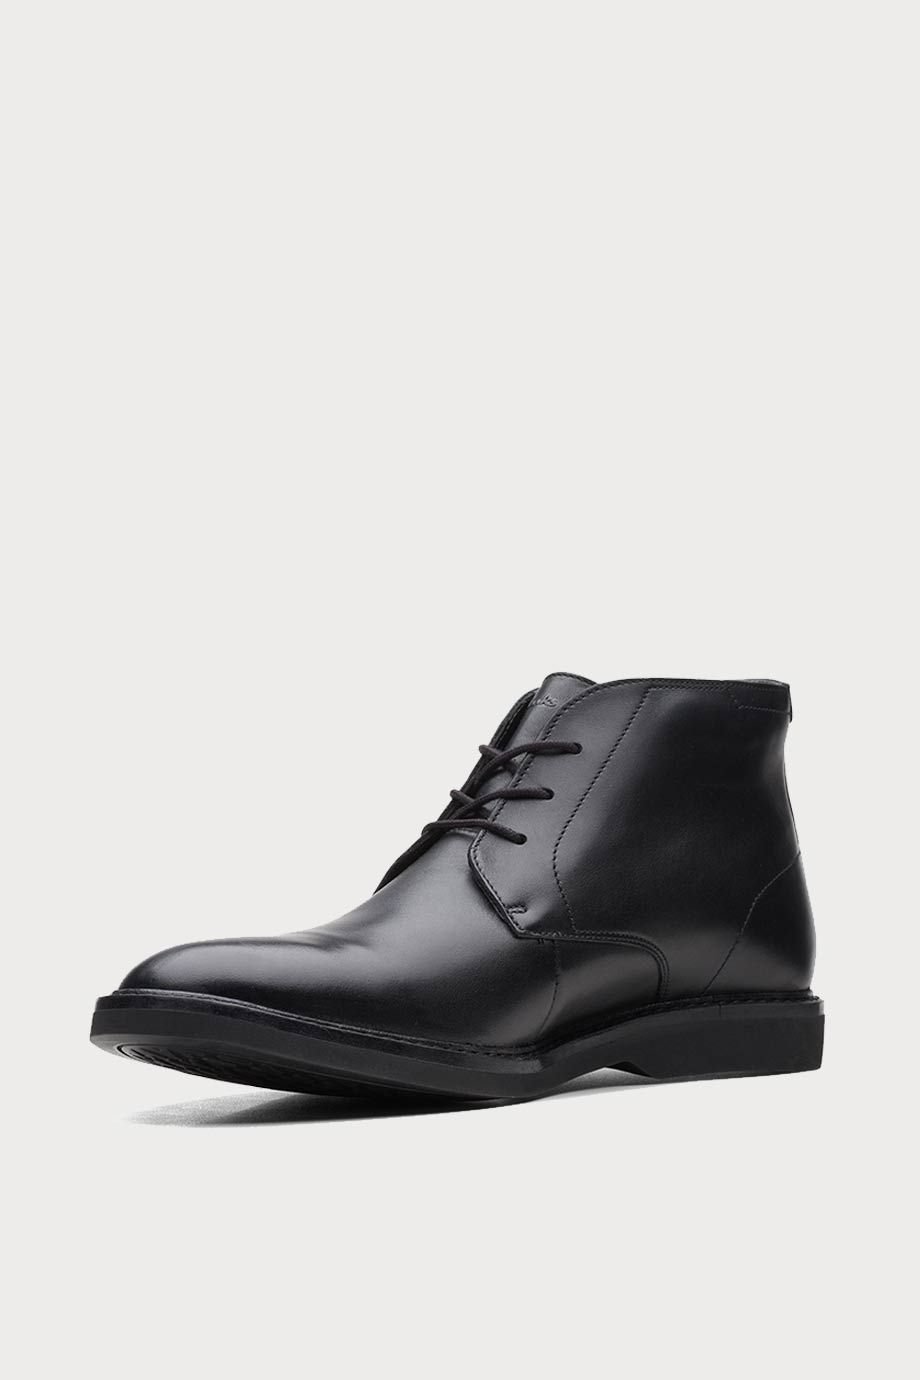 spiridoula metheniti shoes xalkida p AtticusLTHiGTX black leather clarks 4